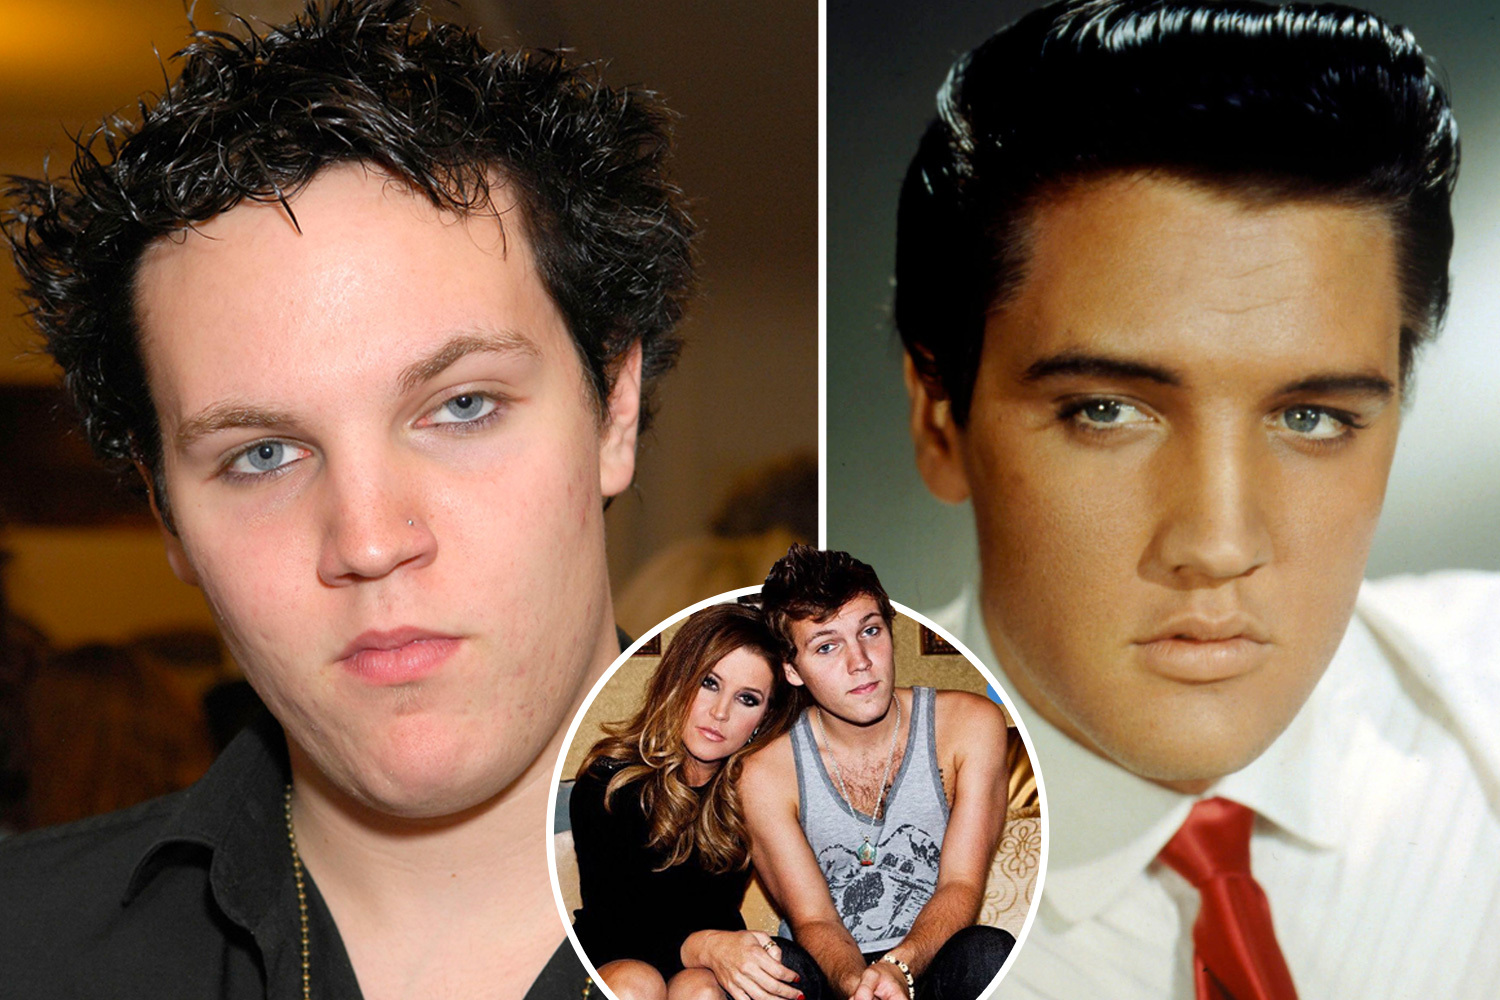 Elvis Presley's grandson Ben Keough had the same looks, same love of